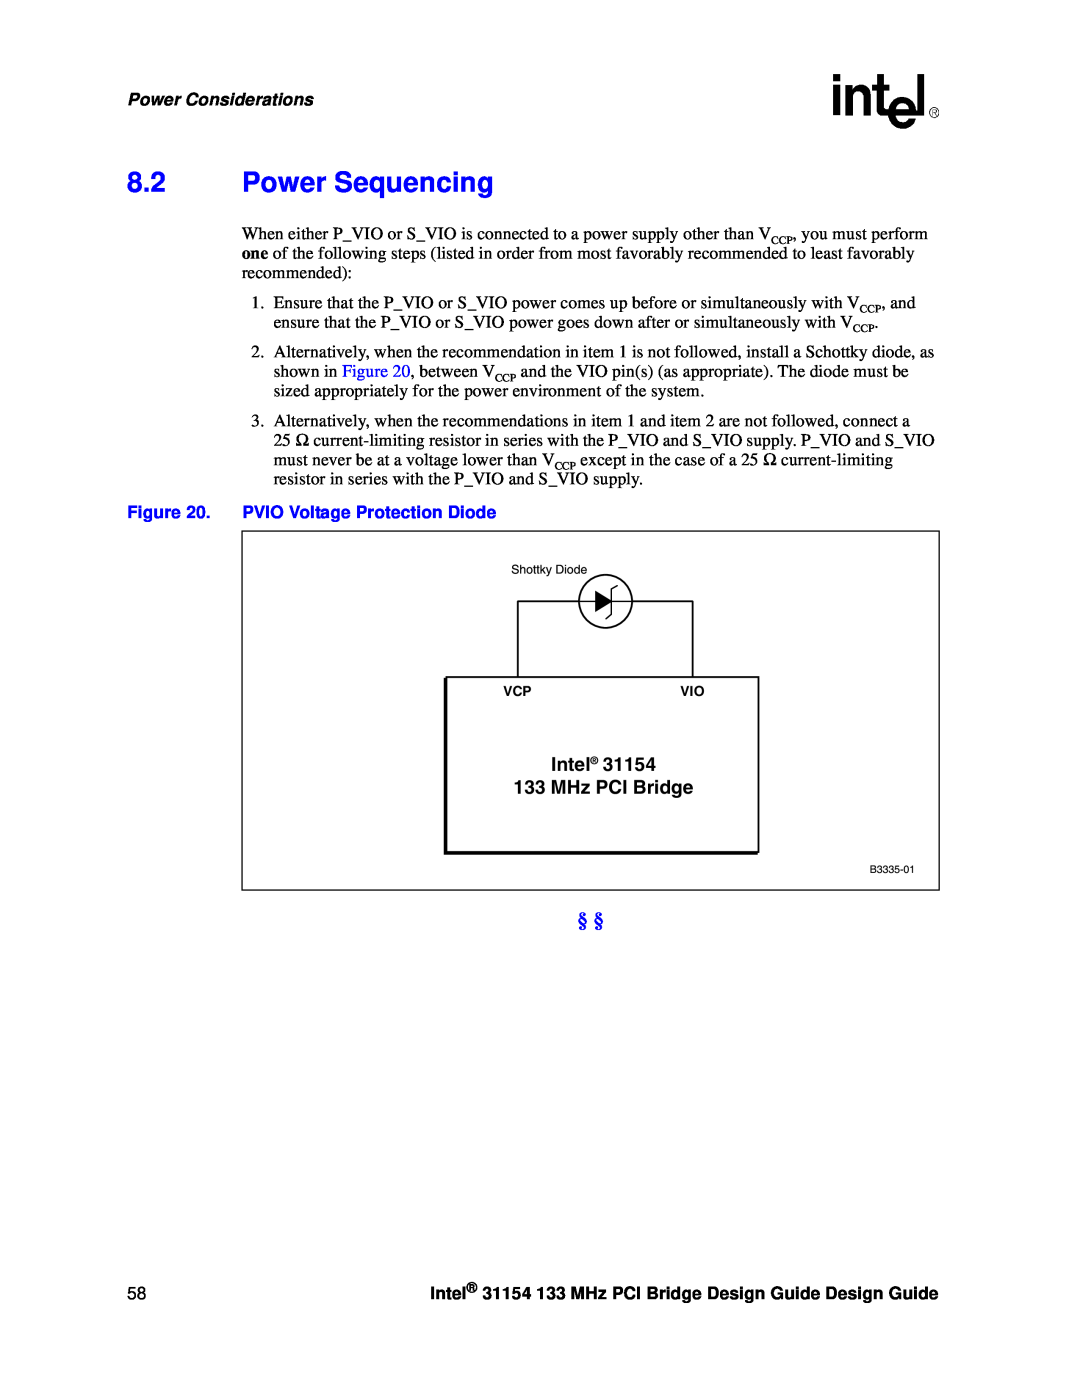 Intel 31154 manual Power Sequencing, Intel 133 MHz PCI Bridge, Power Considerations 